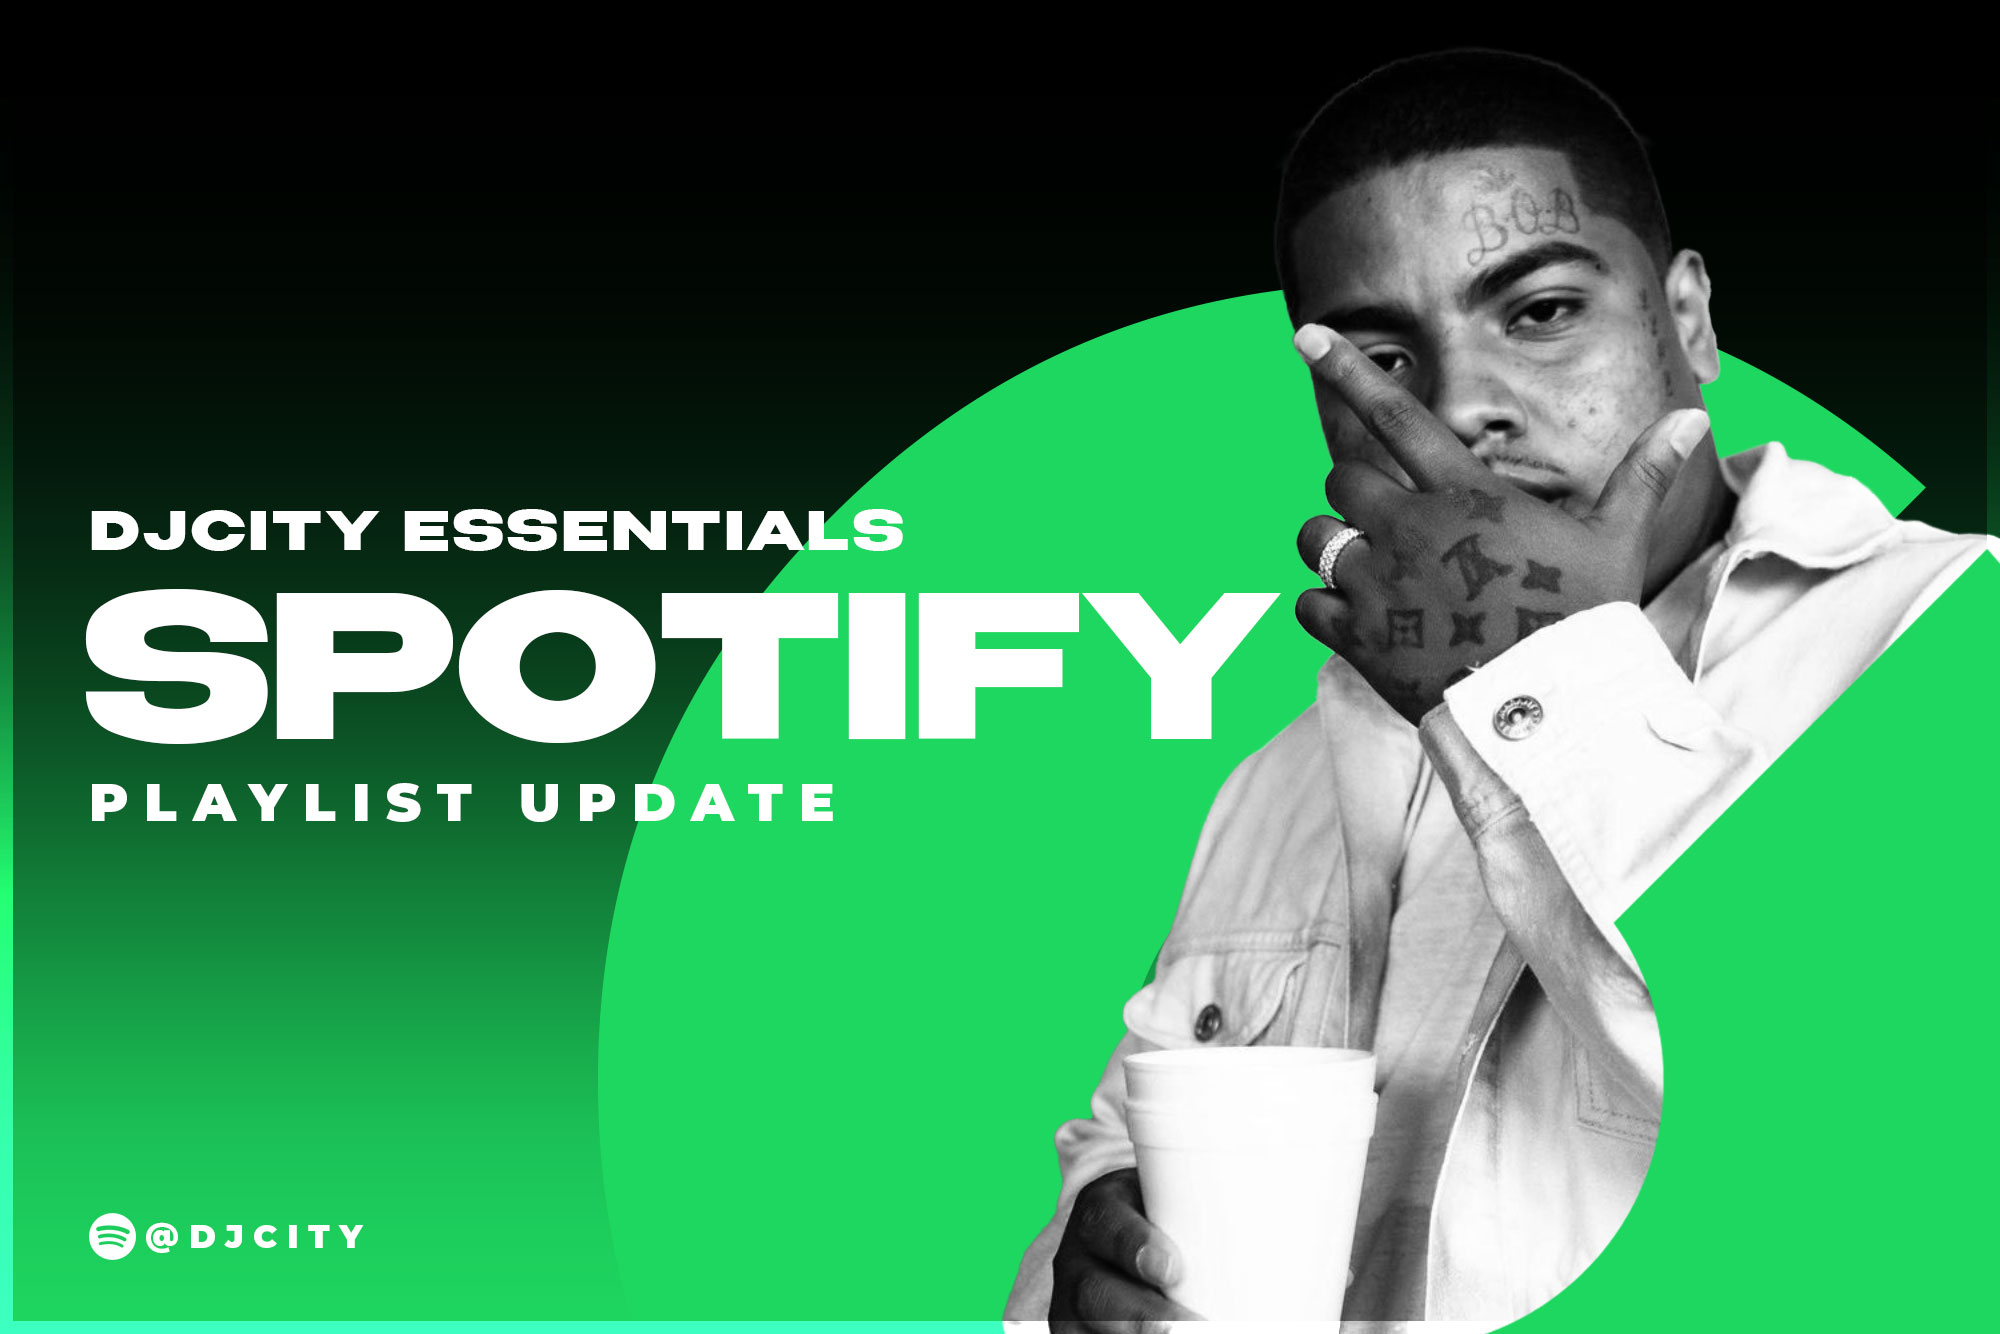 DJcity’s Spotify Playlist Update: Jul. 27